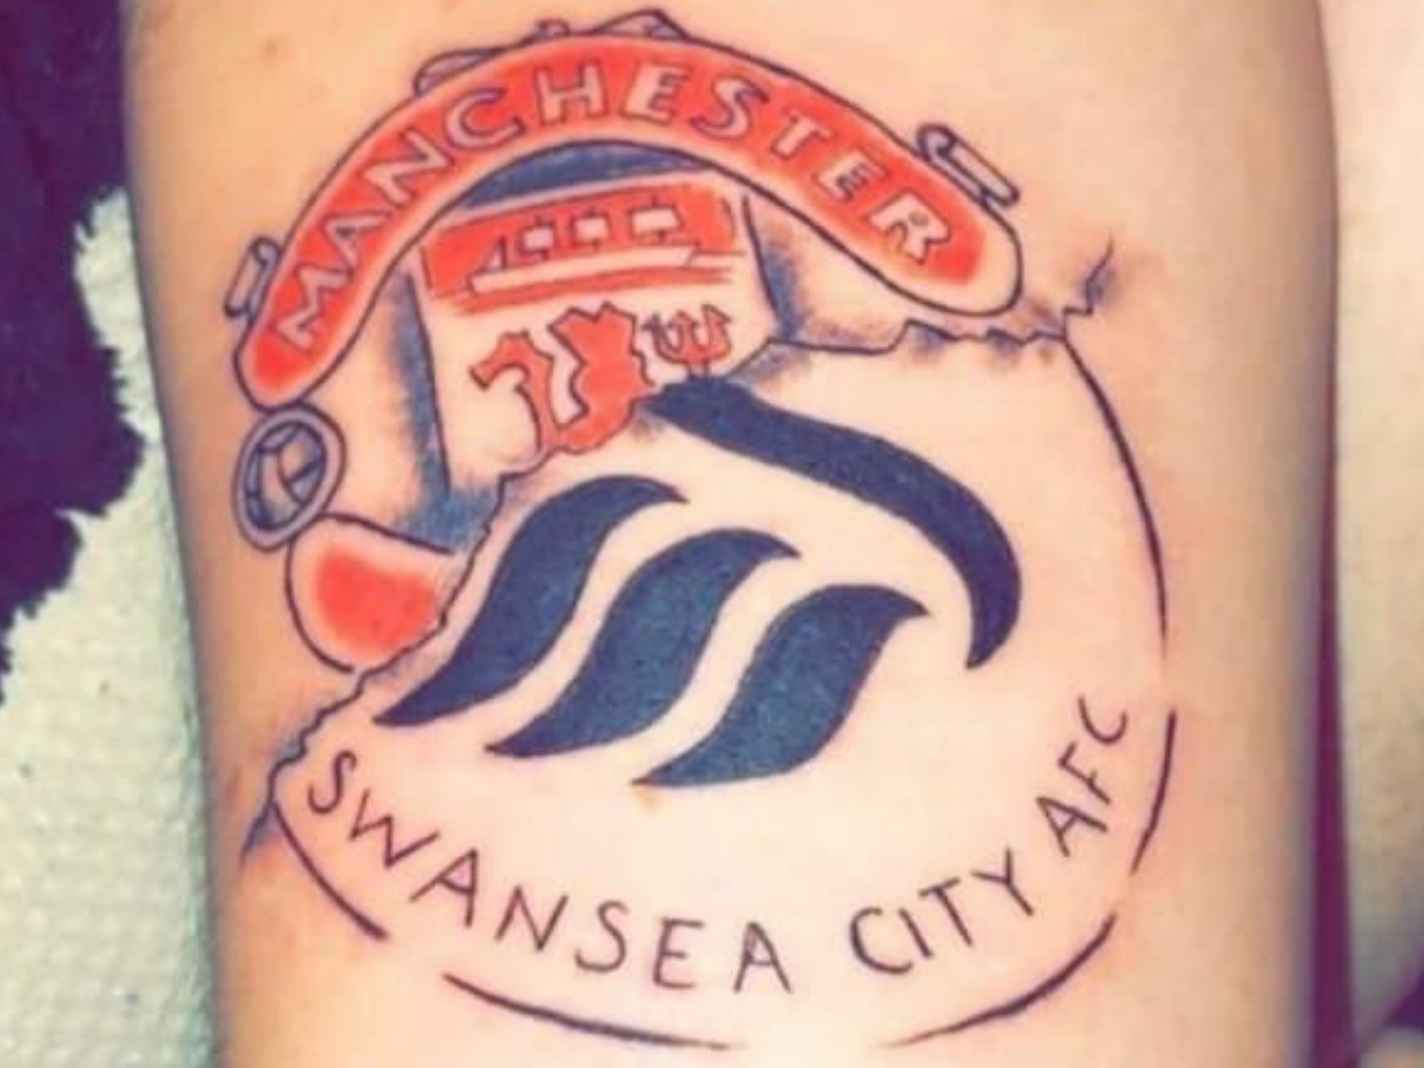 Half & Half Man United and Swansea City Tattoo